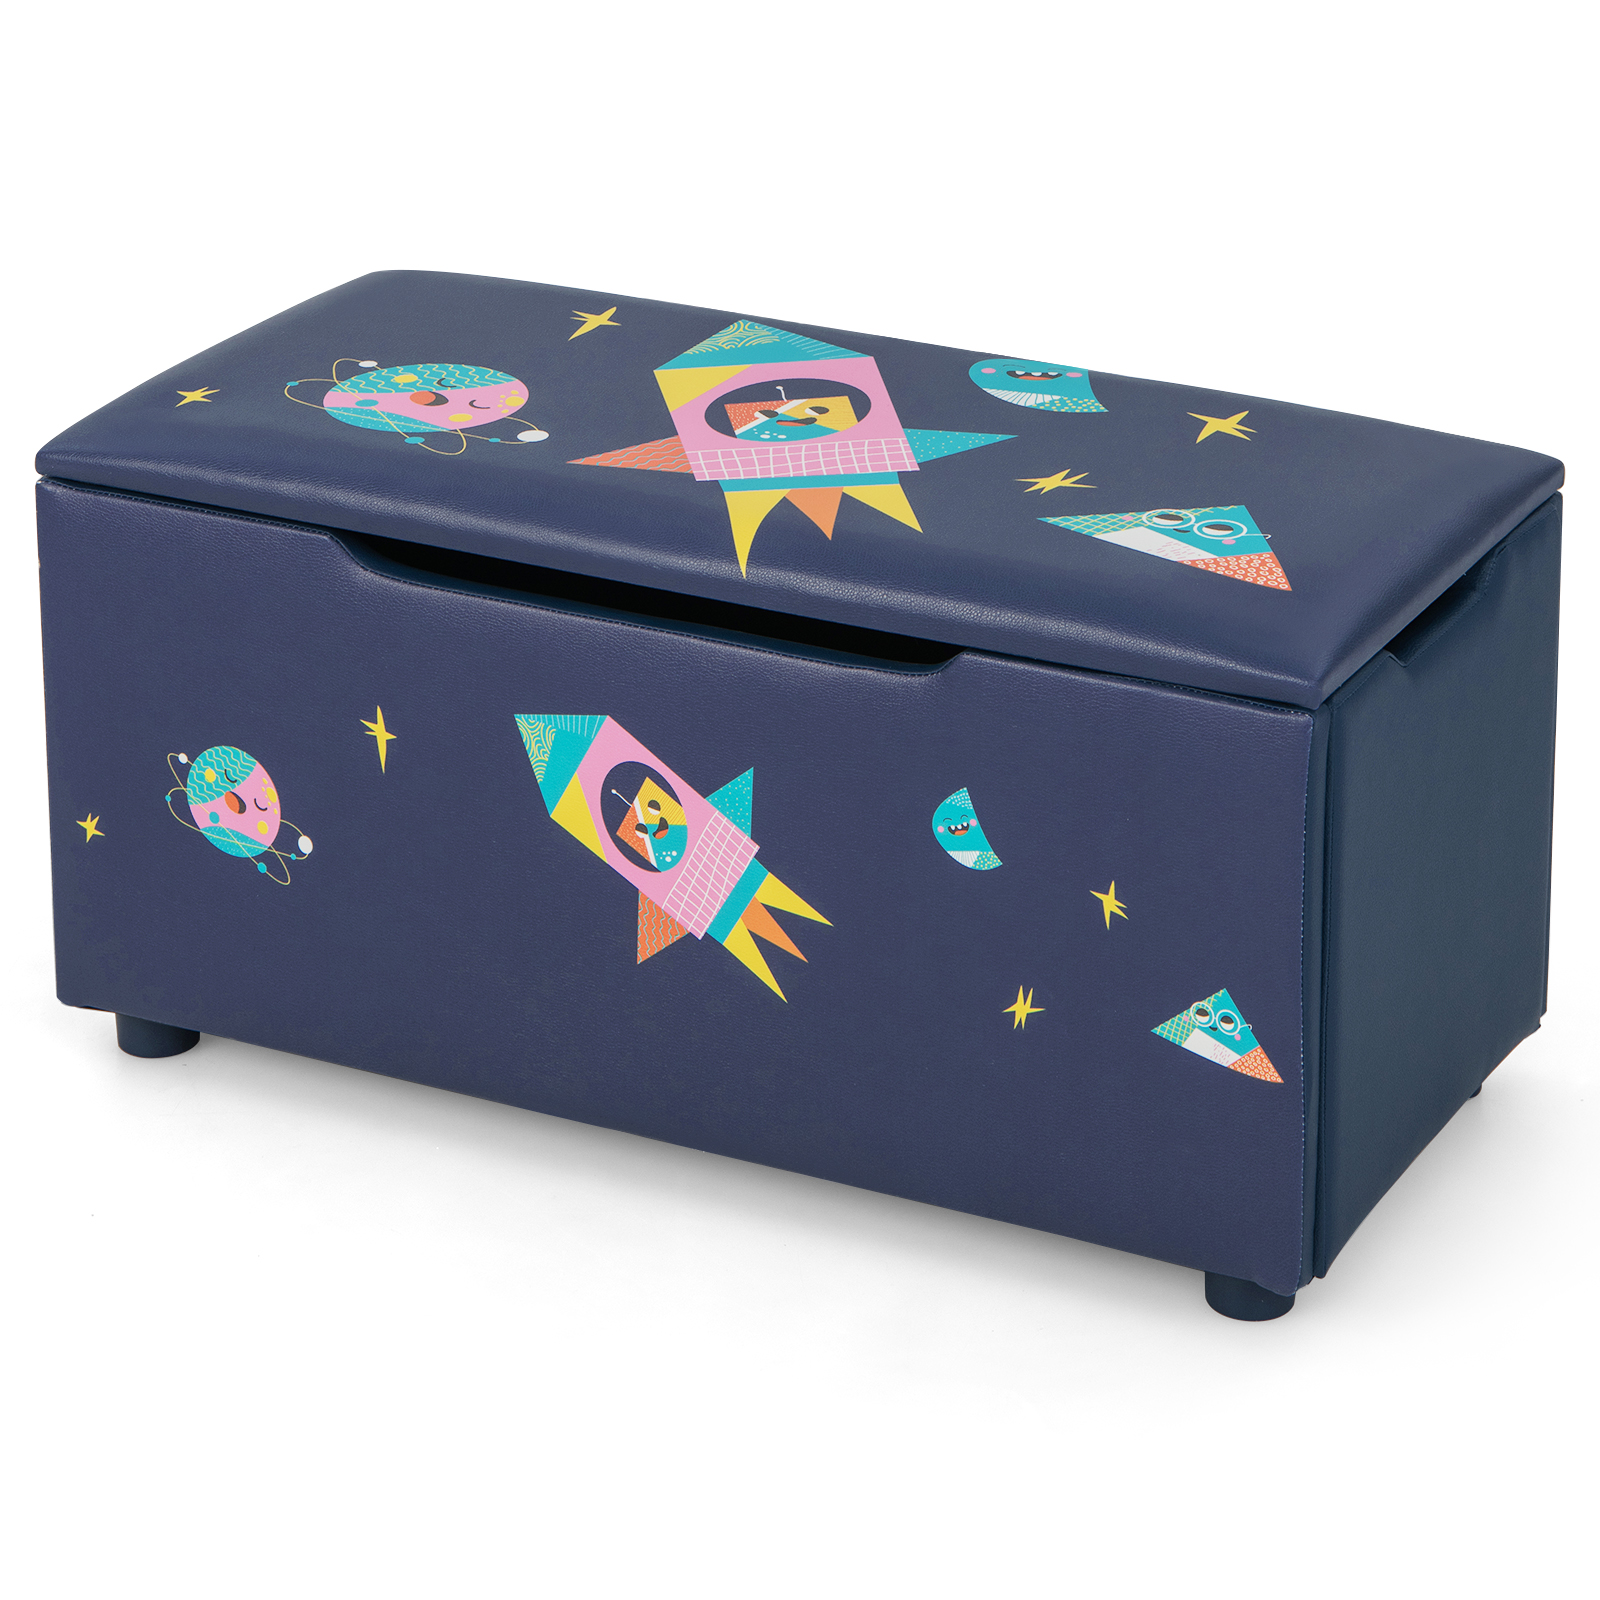 Upholstered Kids Toy Storage Box for Bedroom Nursery Playroom-Navy Blue